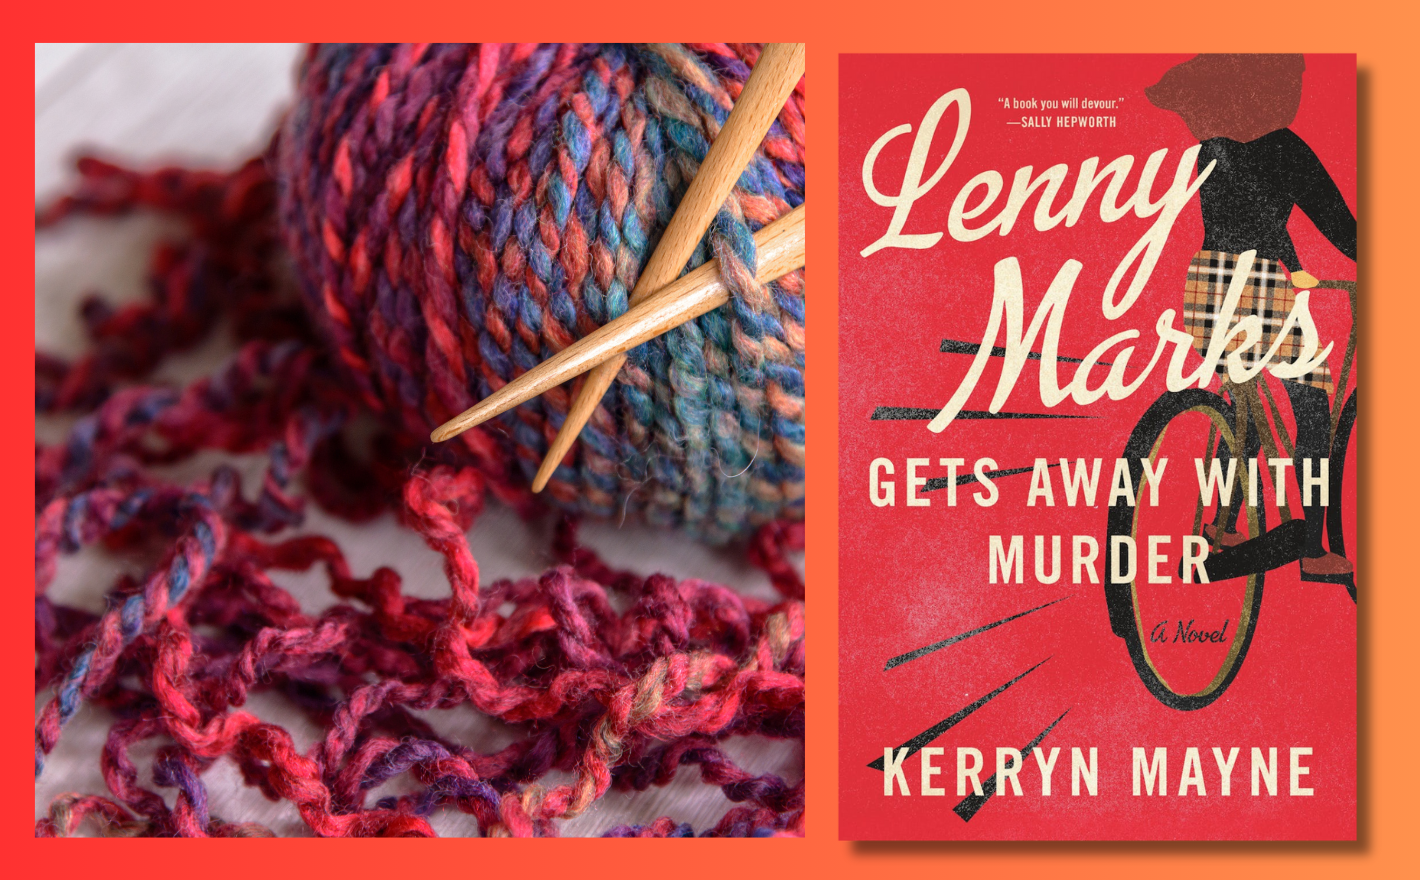 Tell a Yarn: Lenny Marks Gets Away with Murder